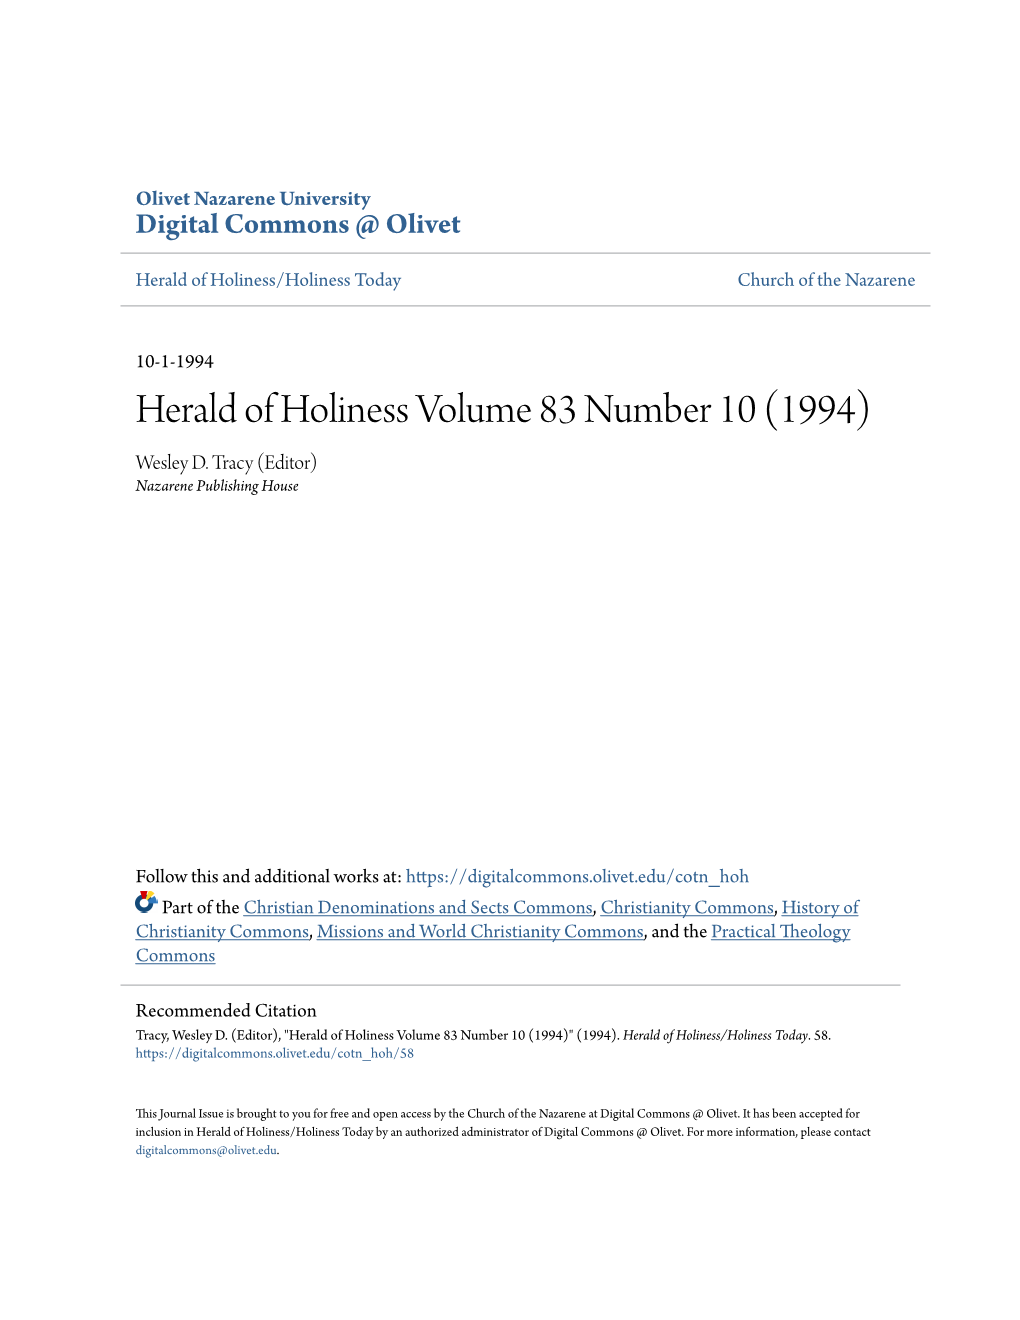 Herald of Holiness Volume 83 Number 10 (1994) Wesley D